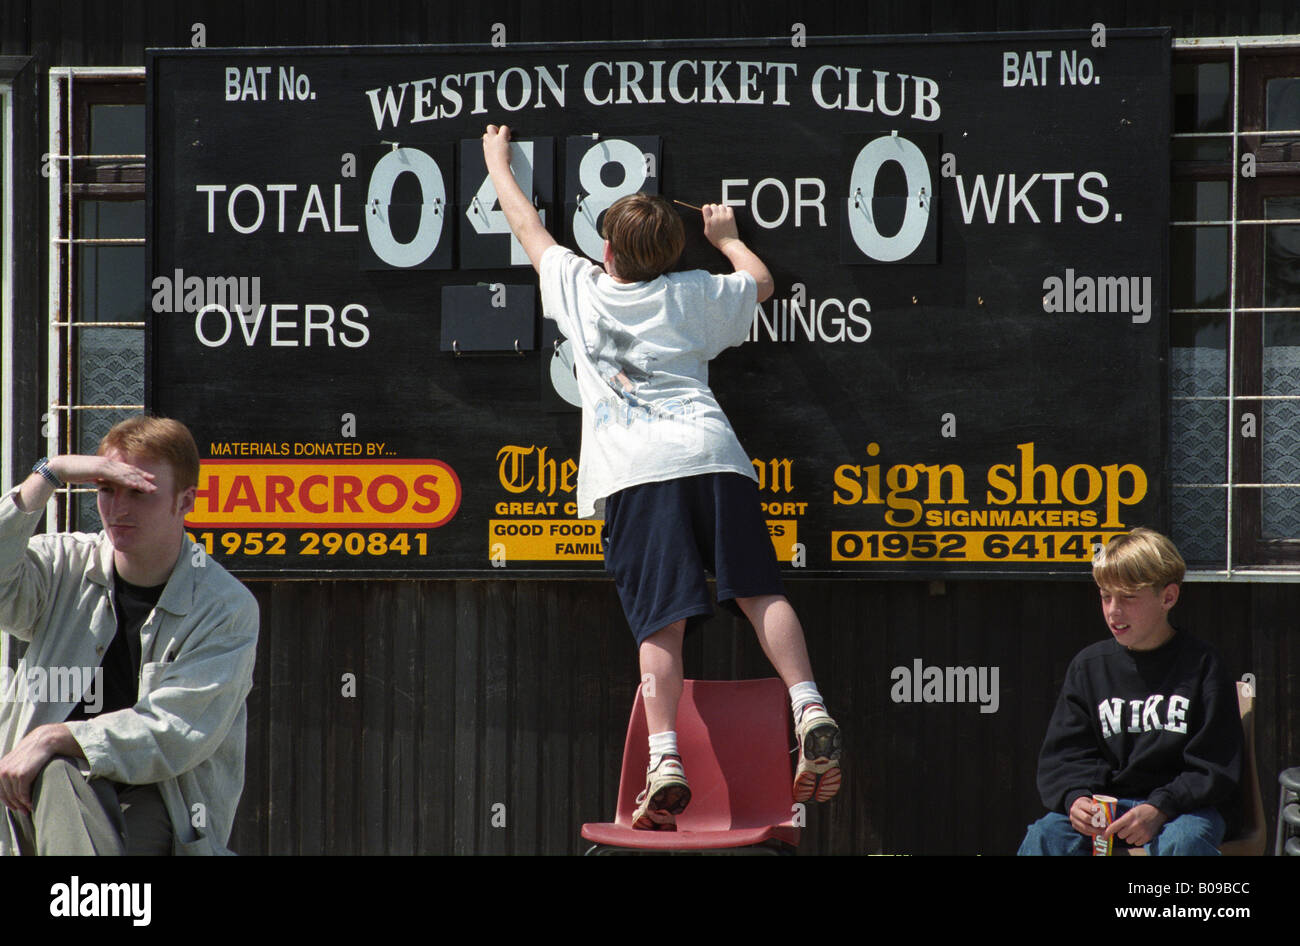 Village cricket scoreboard Stock Photo